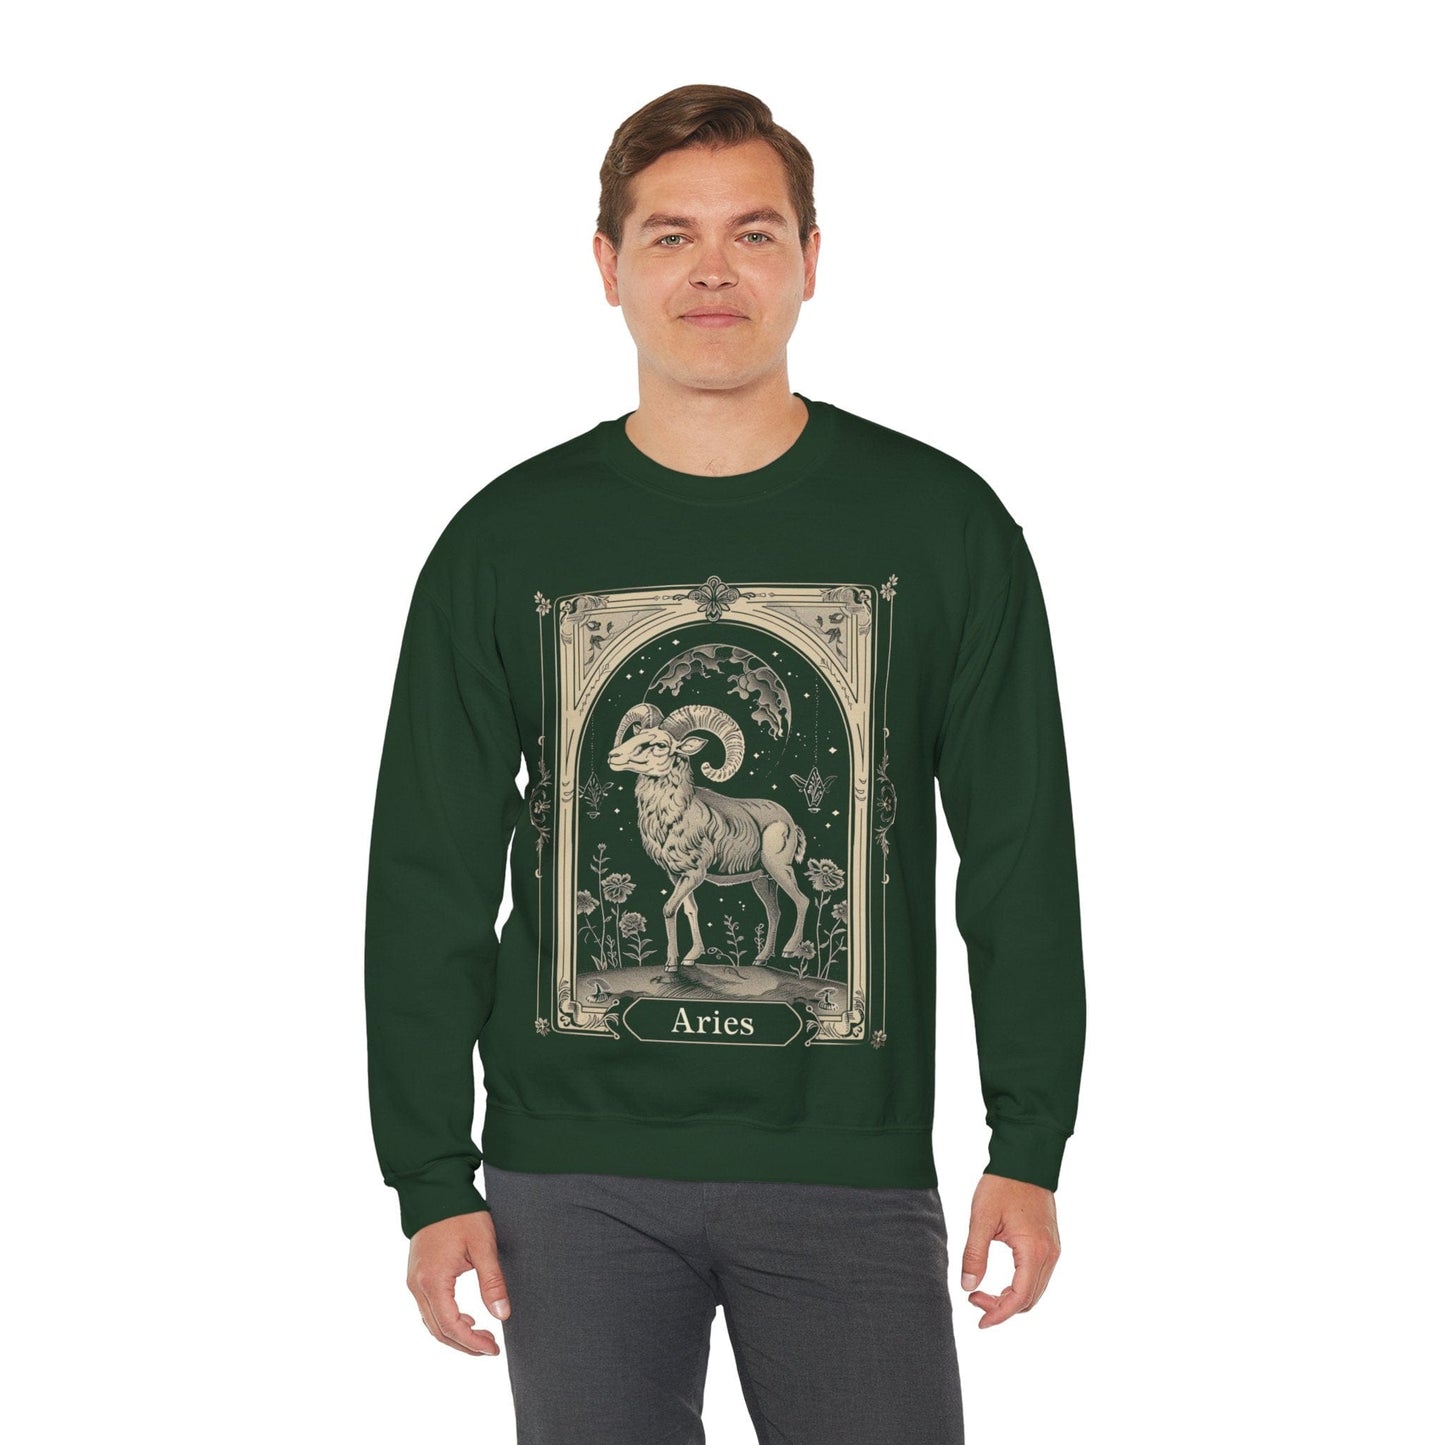 Sweatshirt Aries Illustrated Sweater: Weave the Stars into Your Wardrobe